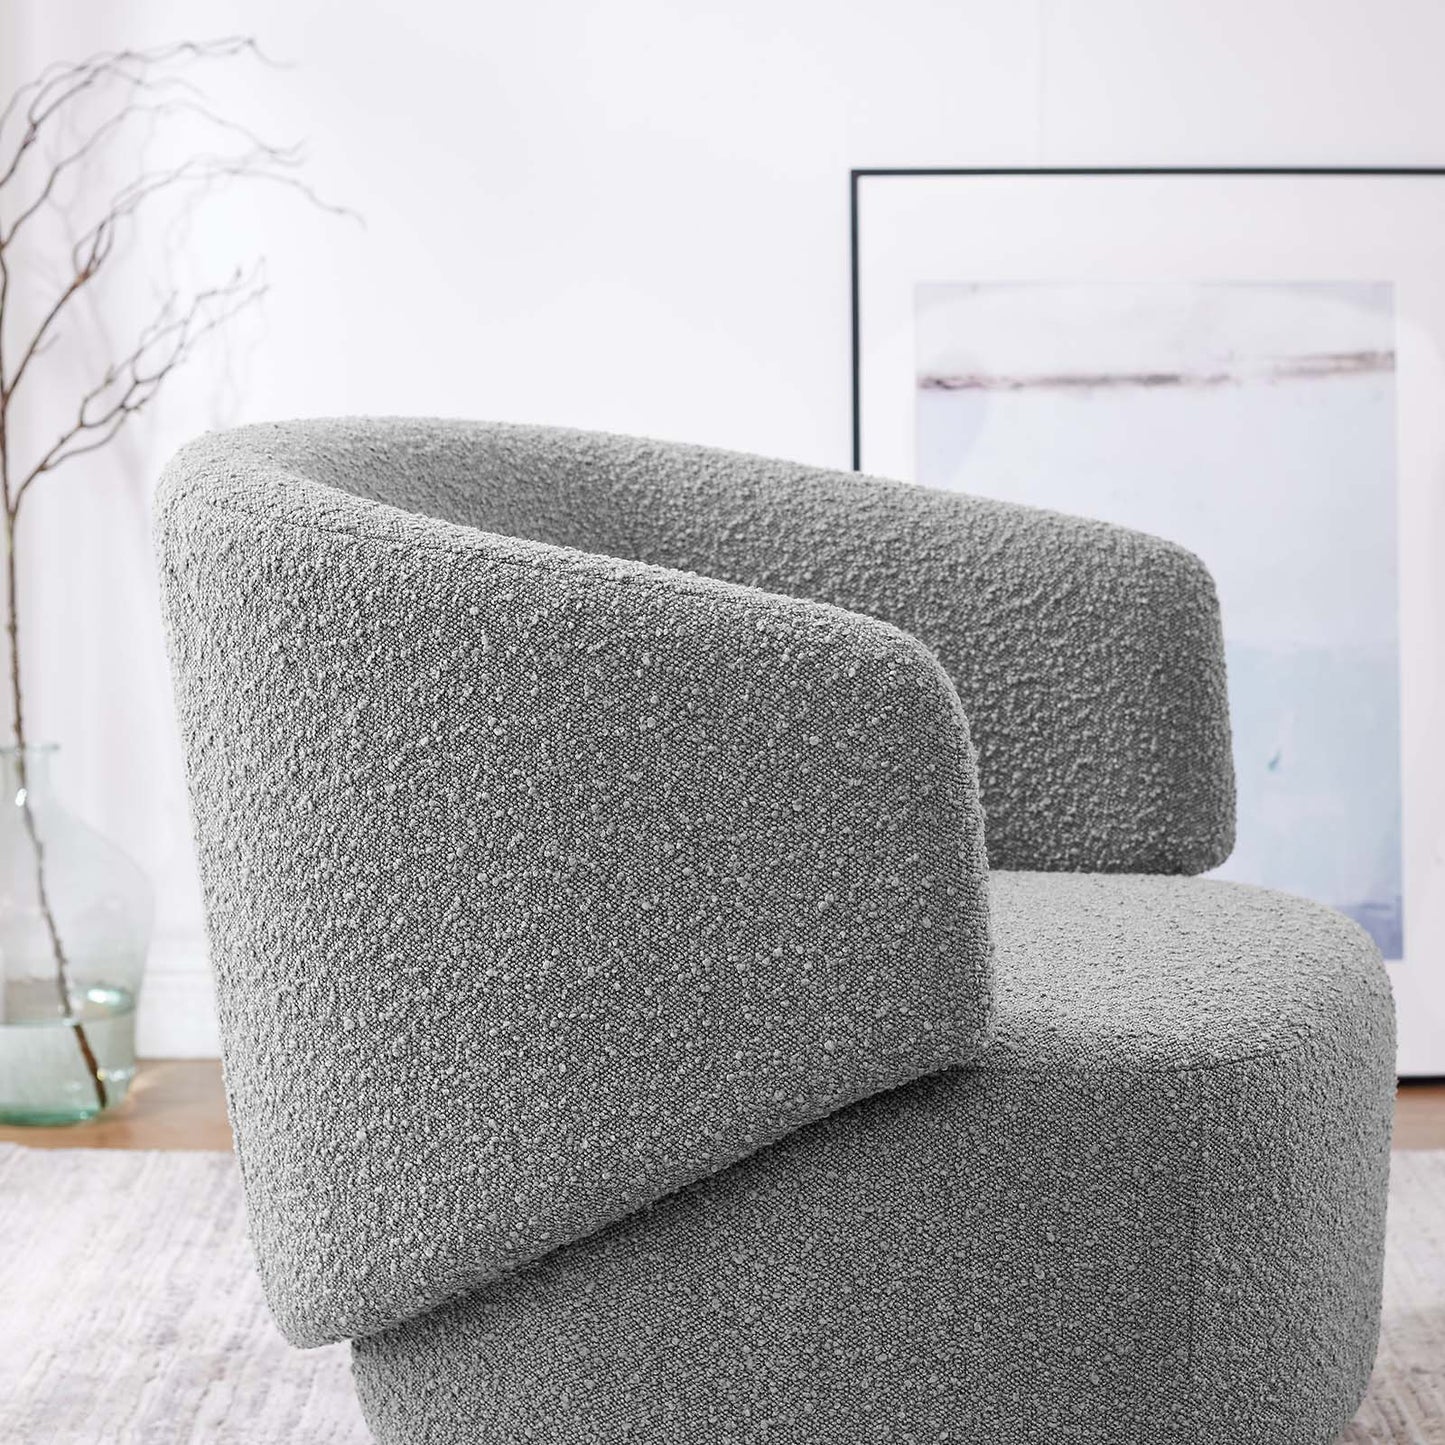 Celestia Boucle Fabric Fabric and Wood Swivel Chair Light Gray EEI-6357-LGR